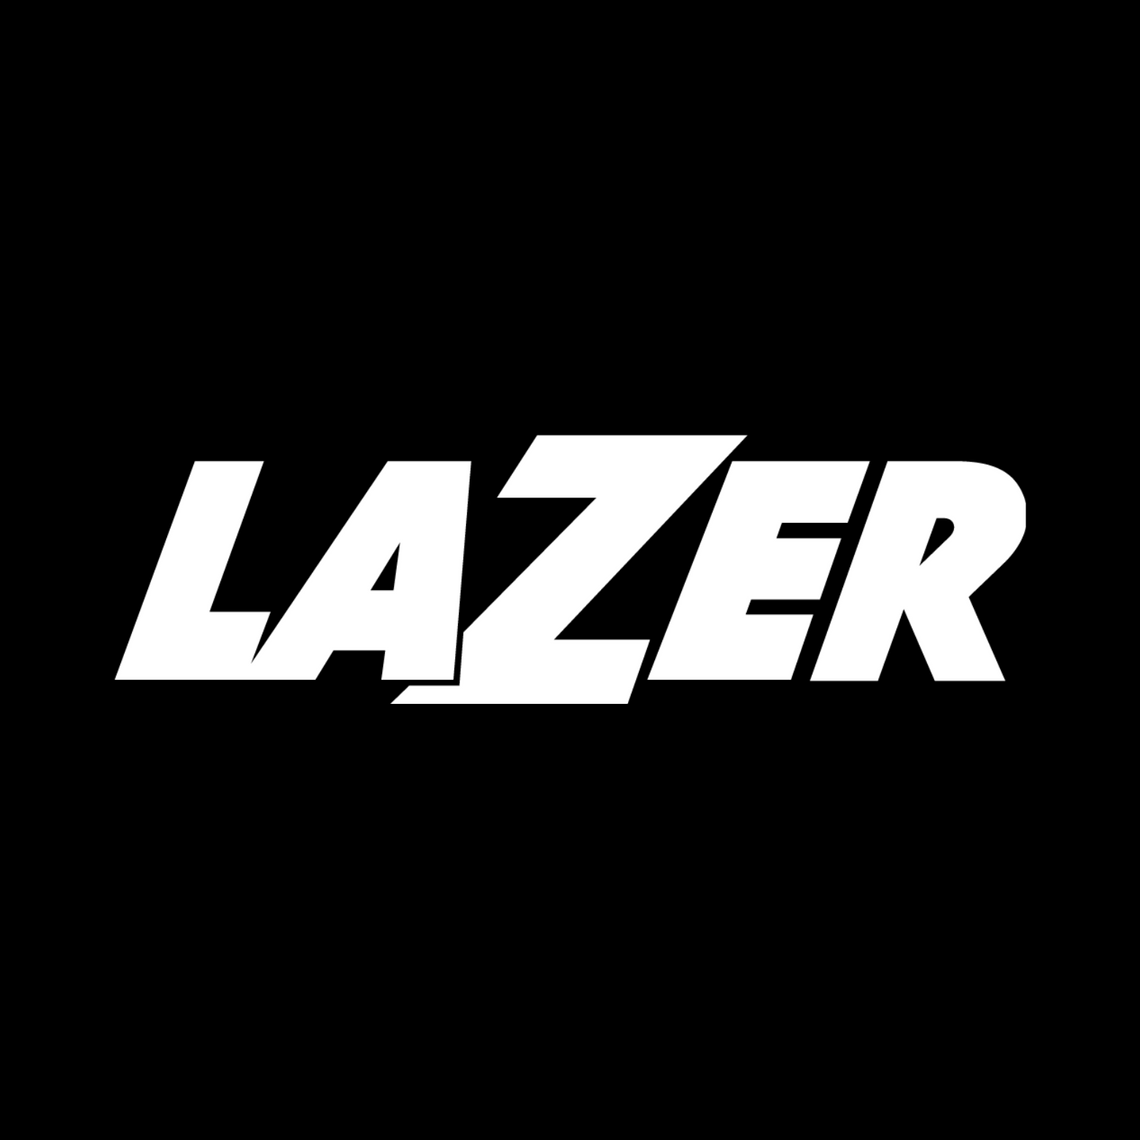 square version of the Lazer logo